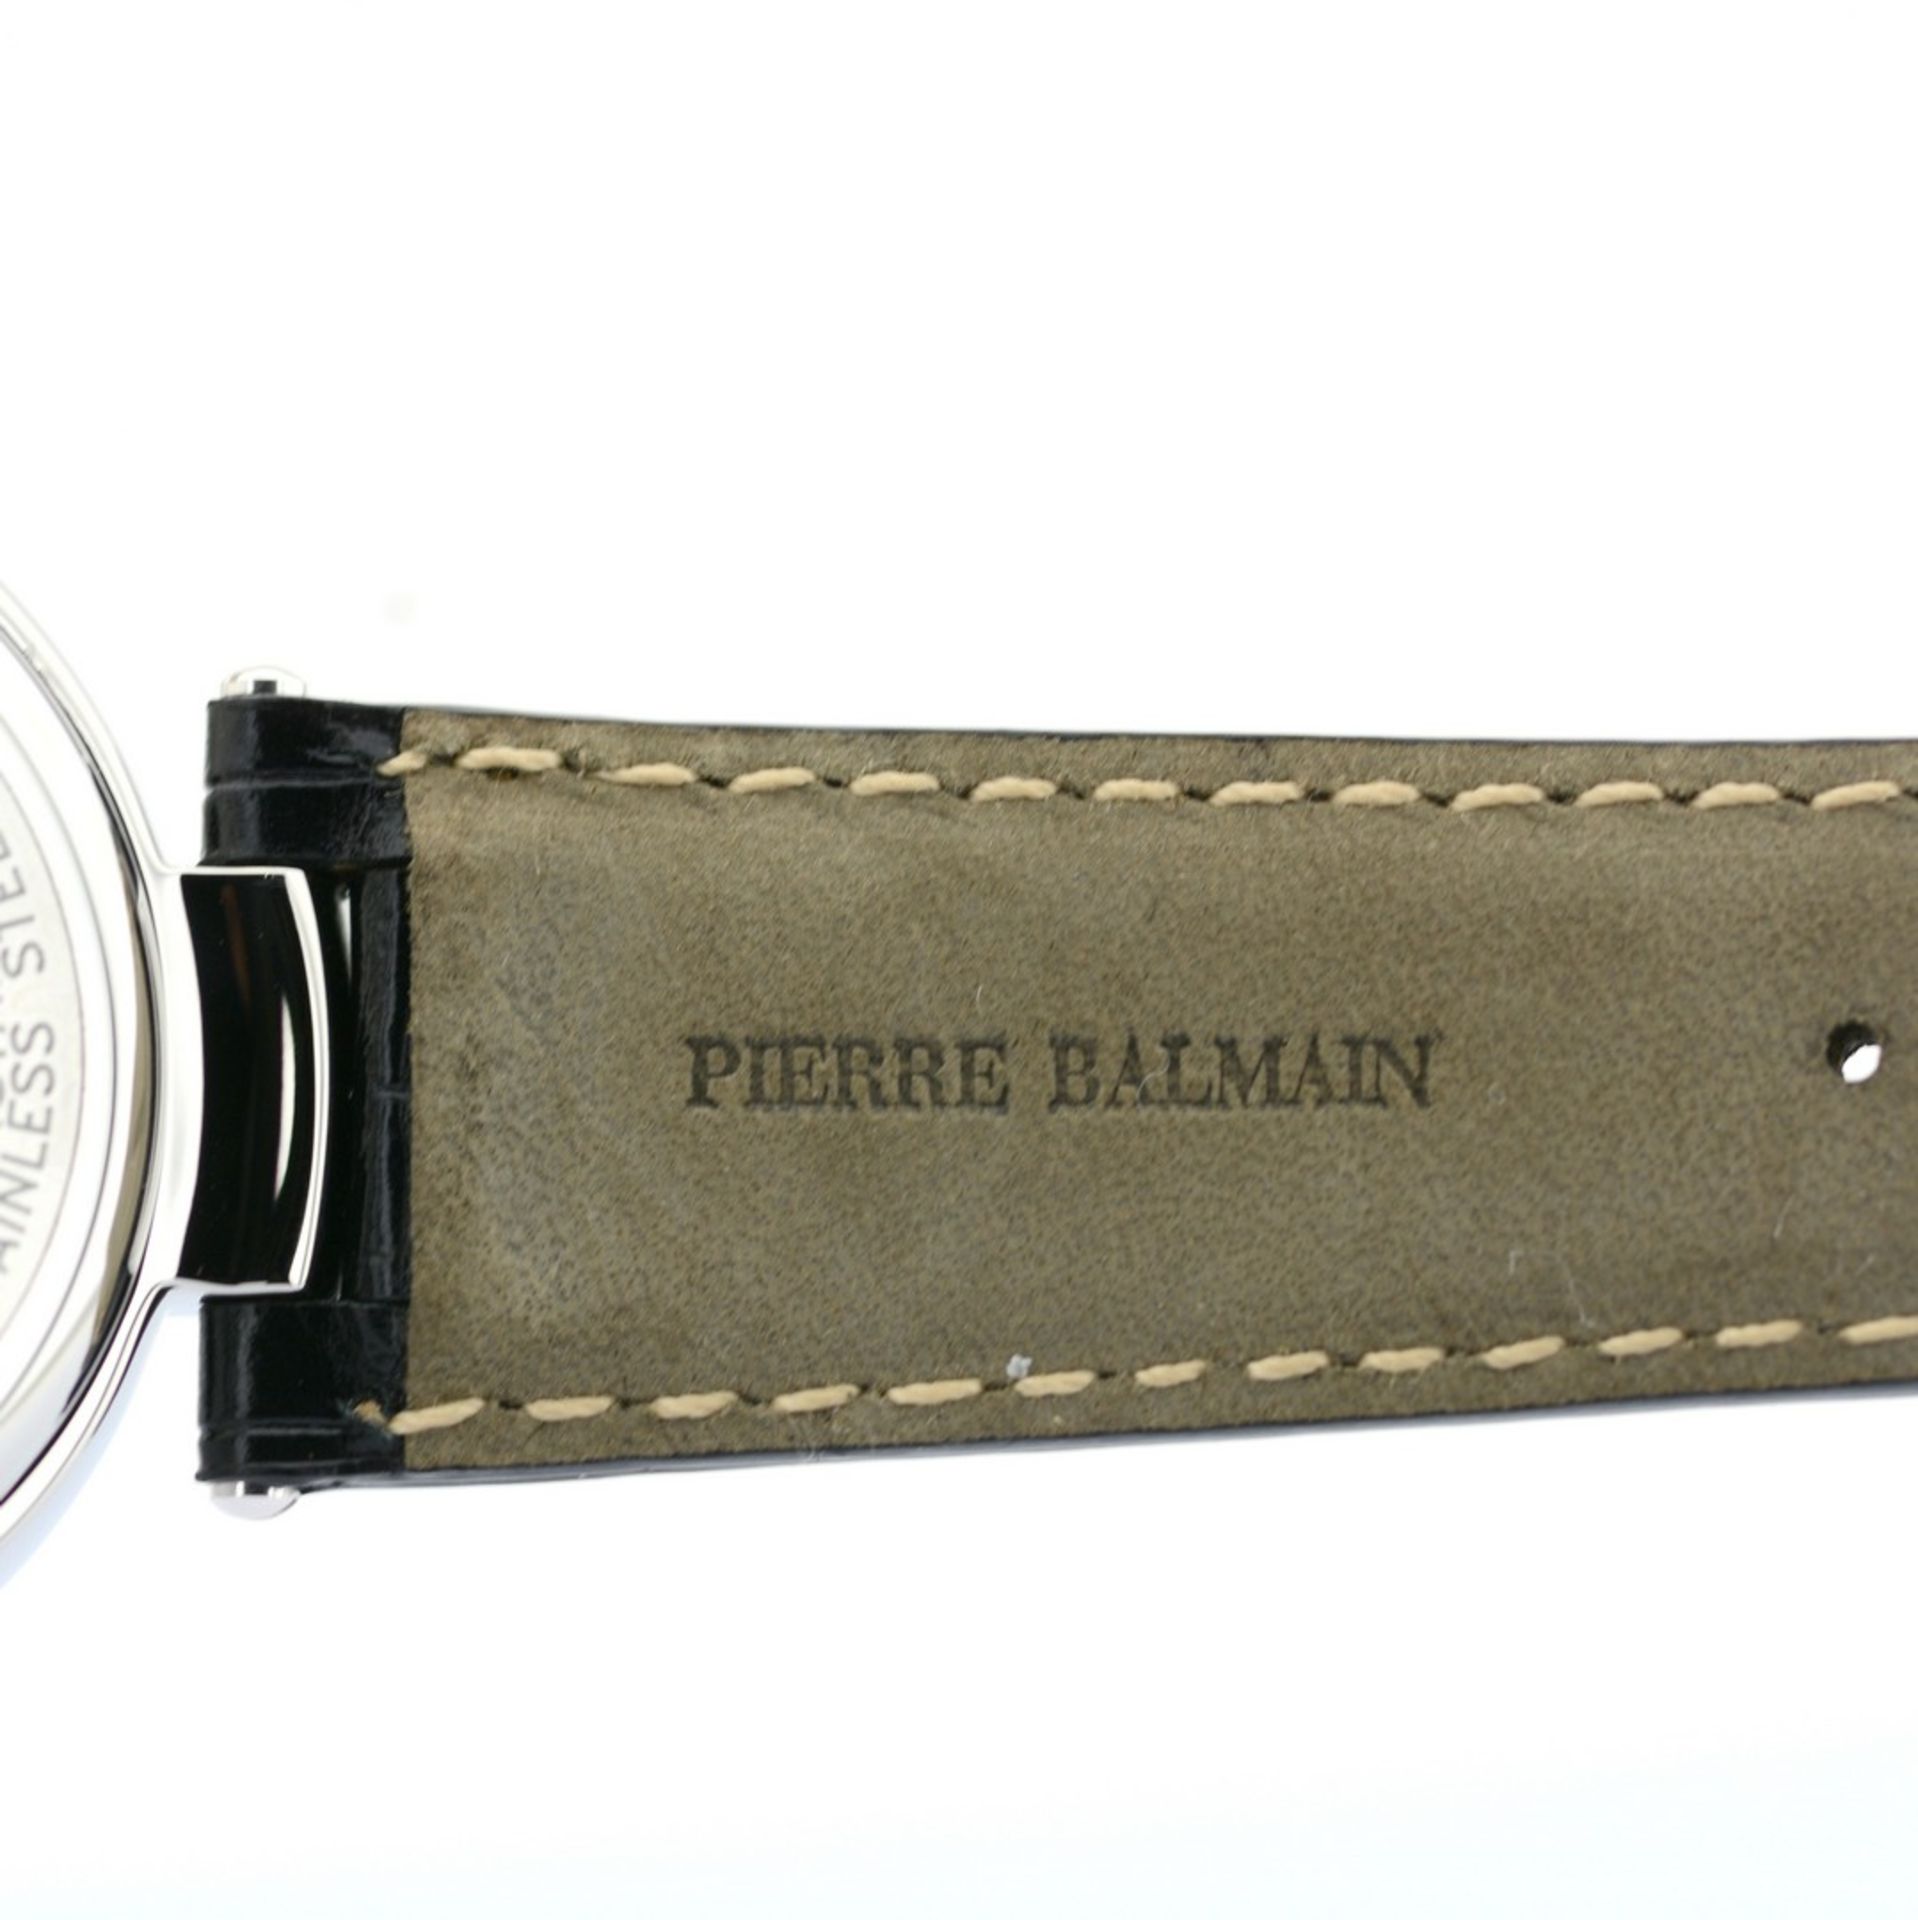 Pierre Balmain / Swiss Chronograph Date - Gentlemen's Steel Wristwatch - Image 2 of 10